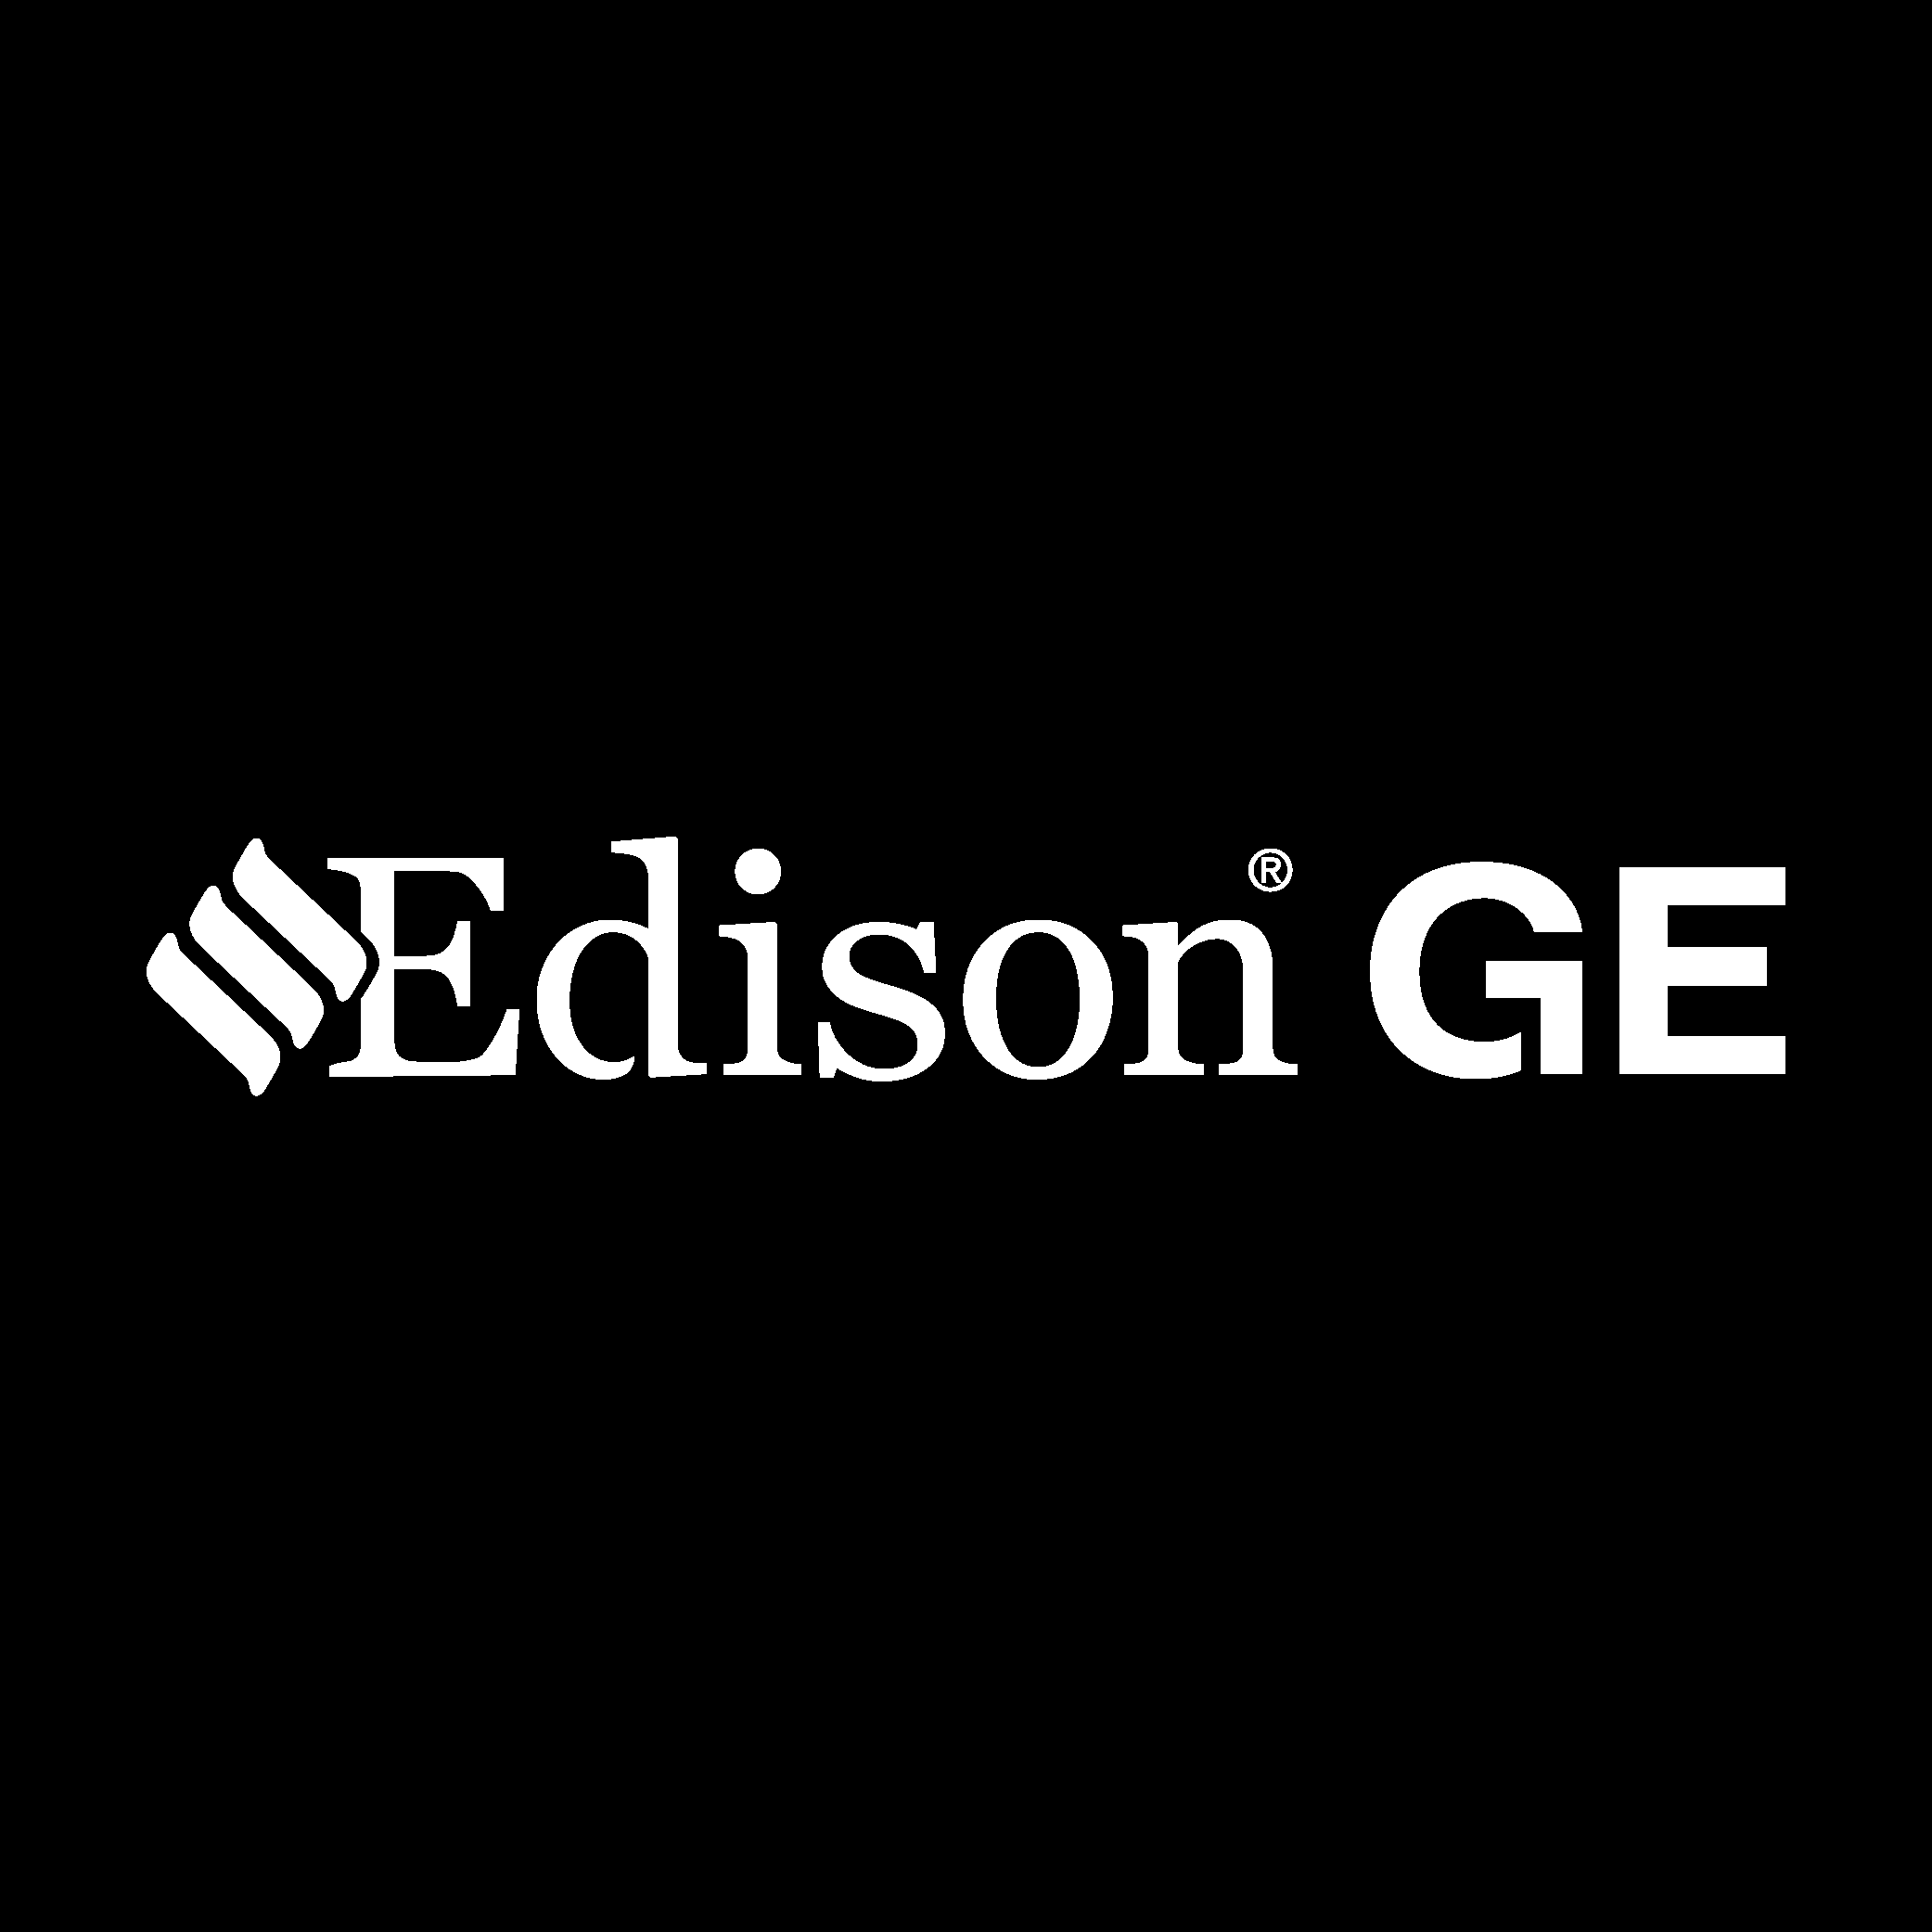 Edison GE white Logo Vector